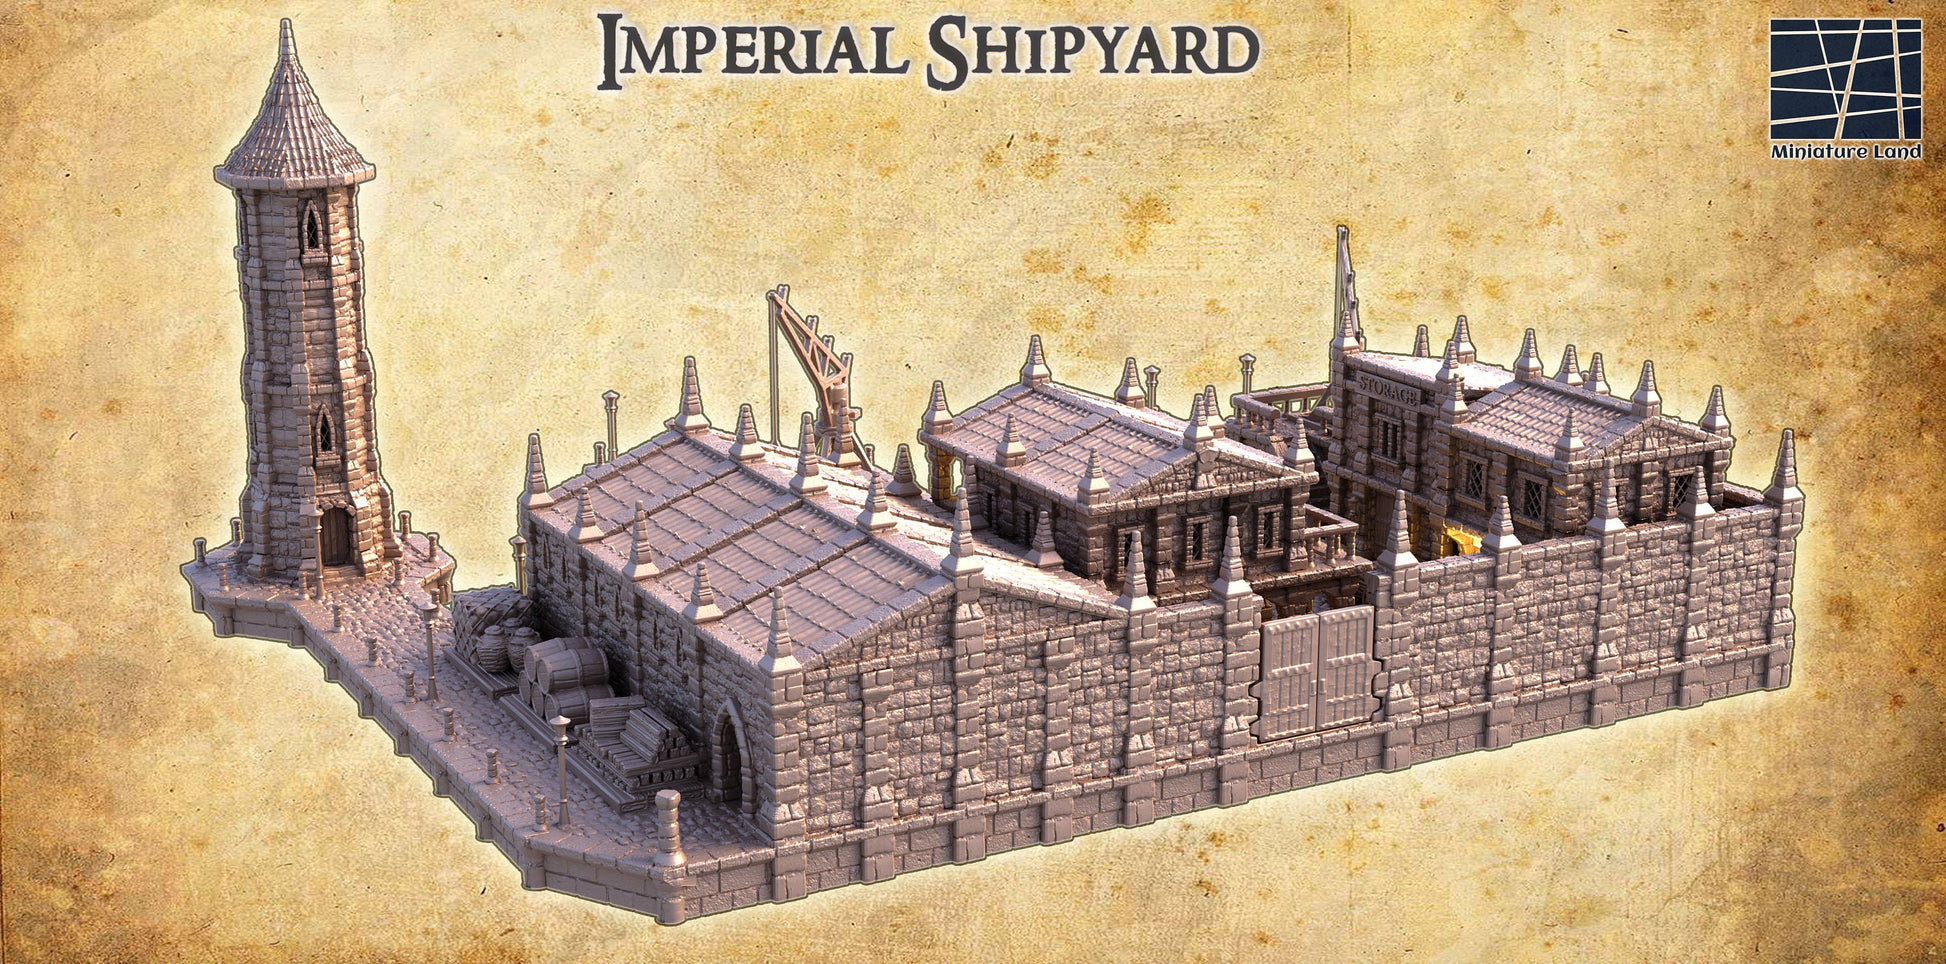 Imperial Shipyard, Shipwright, Docks, Lighthouse